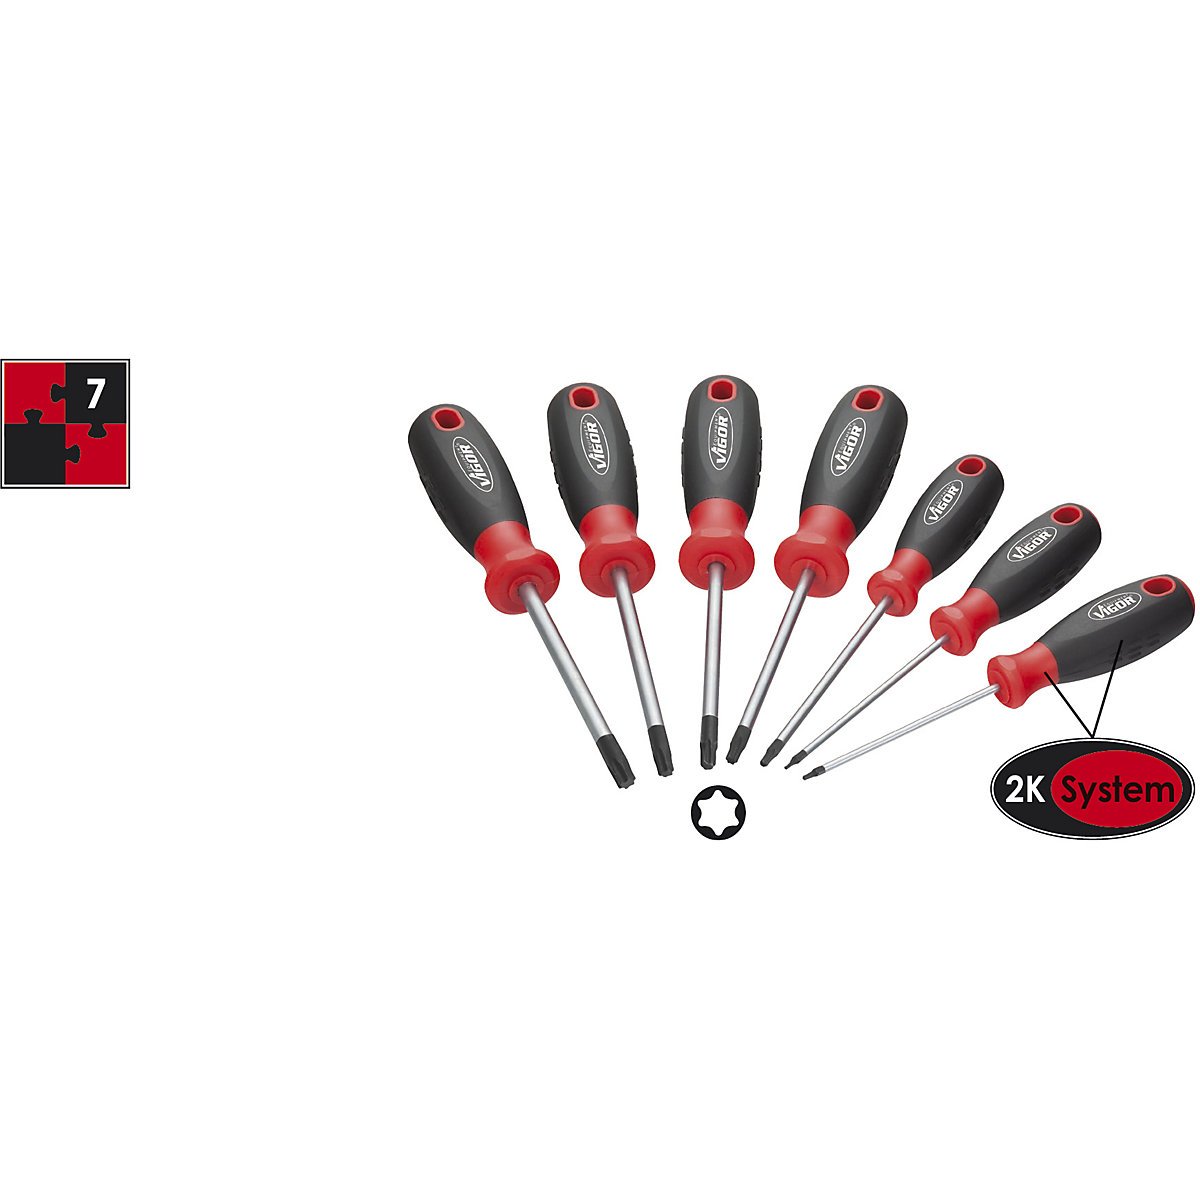 Hexalobular screwdriver set - VIGOR